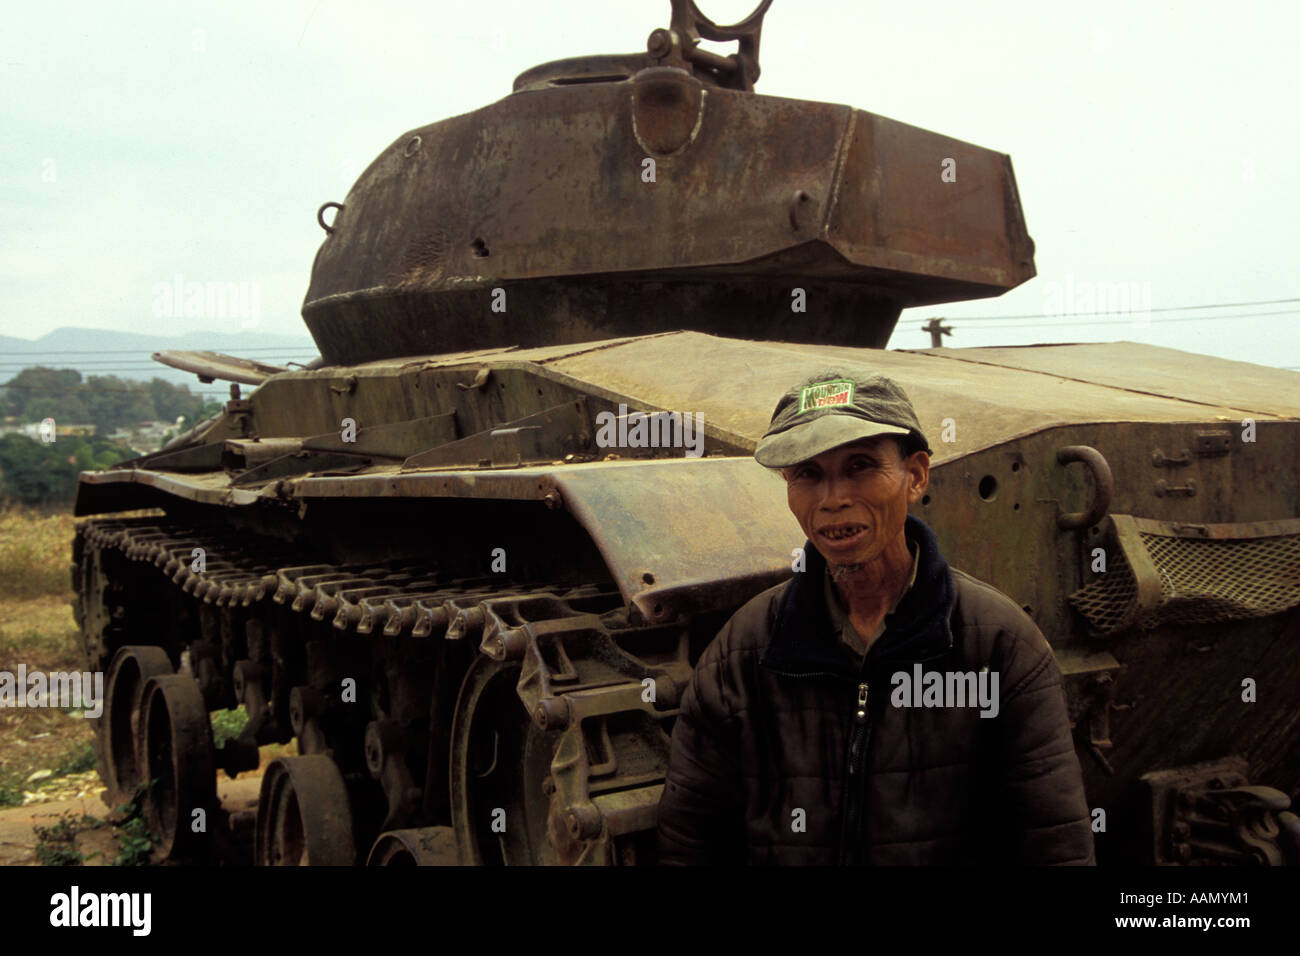 Kriegsveteran posiert neben Panzer aus Vietnam Krieg, Dien Bien Phu, Nordvietnam Stockfoto